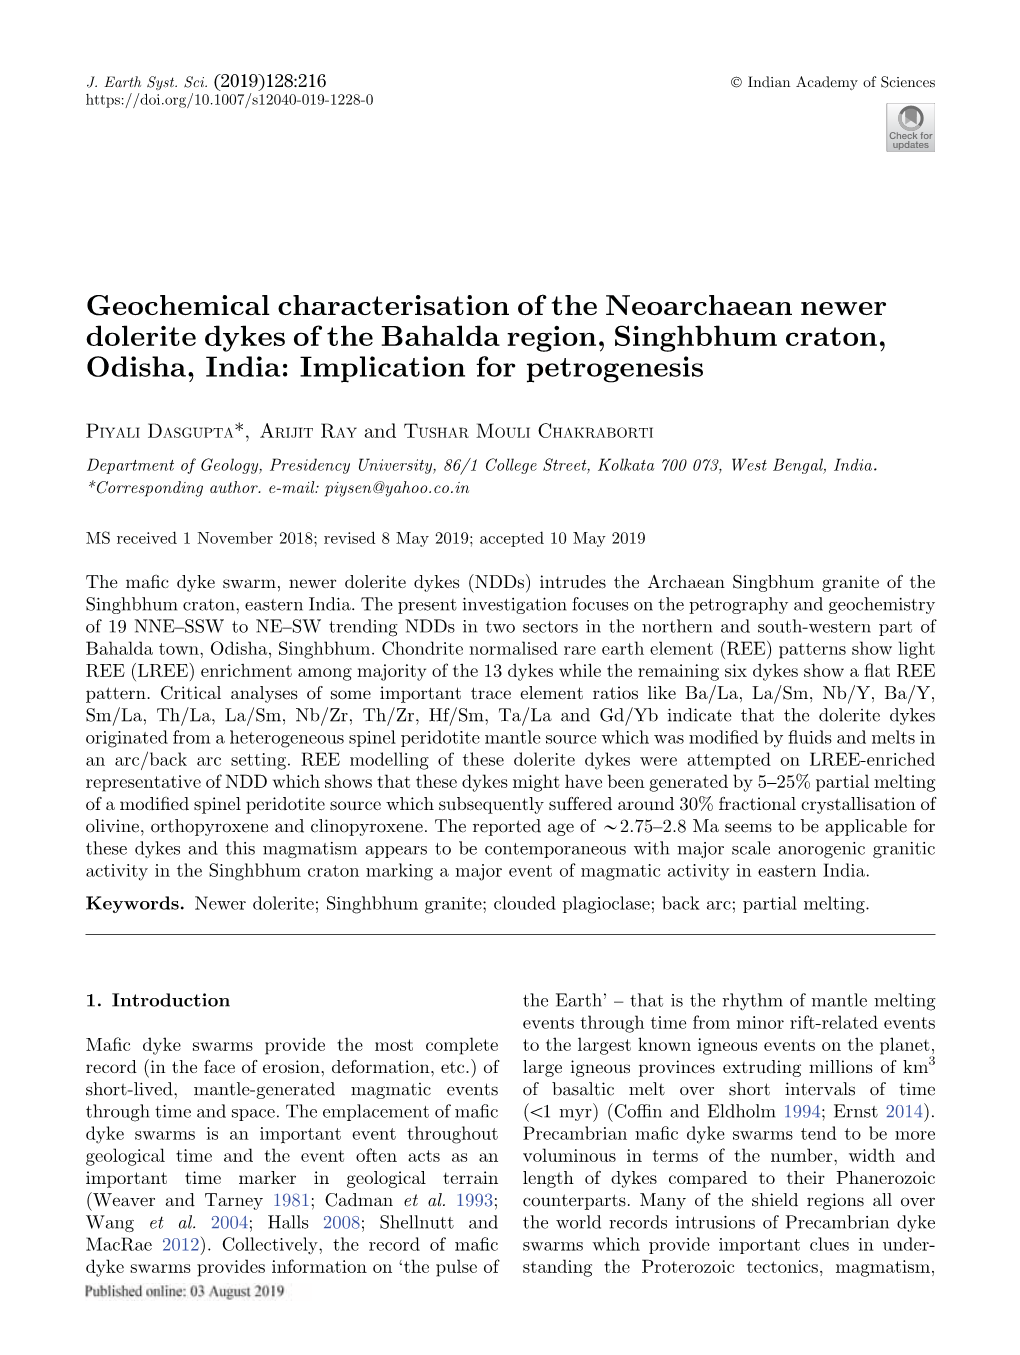 Geochemical Characterisation of the Neoarchaean Newer Dolerite Dykes of the Bahalda Region, Singhbhum Craton, Odisha, India: Implication for Petrogenesis